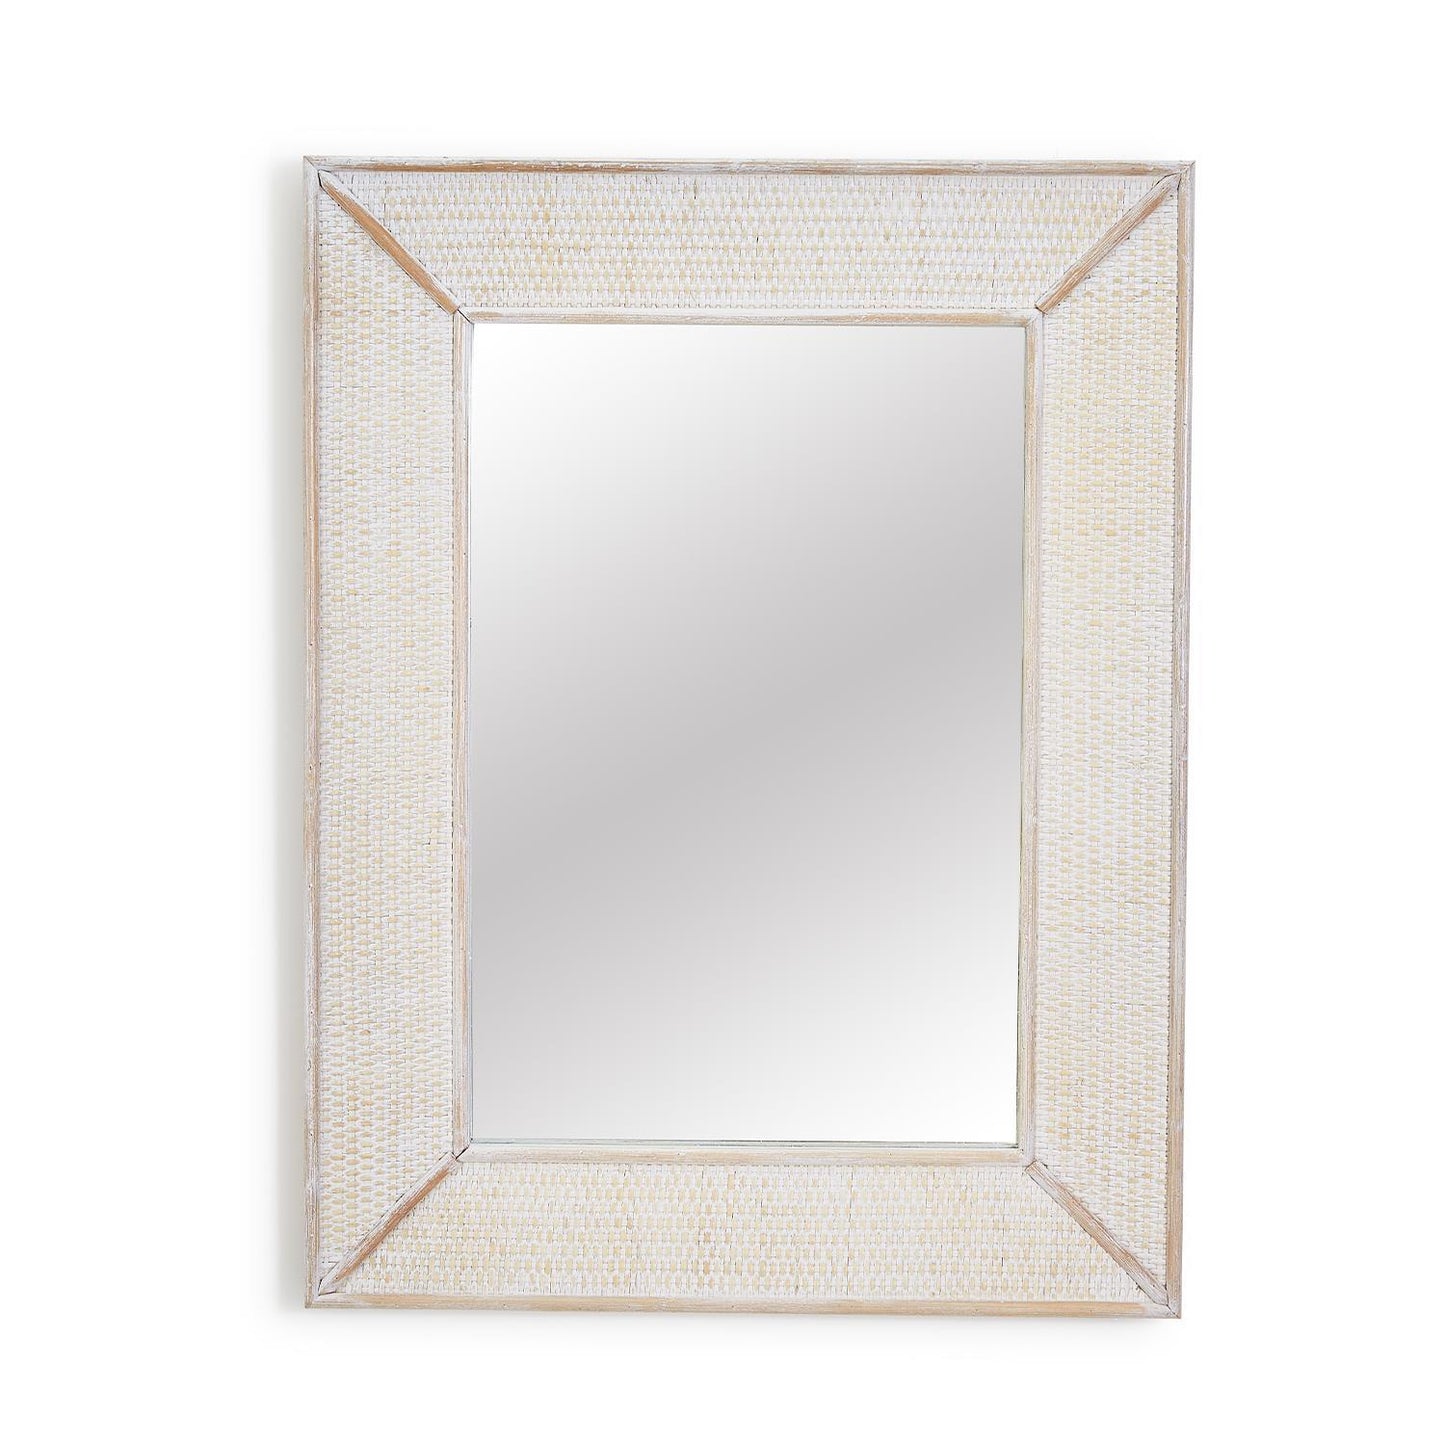 Two's Company Rattan Wall Mirror, 26.5"x20.75"